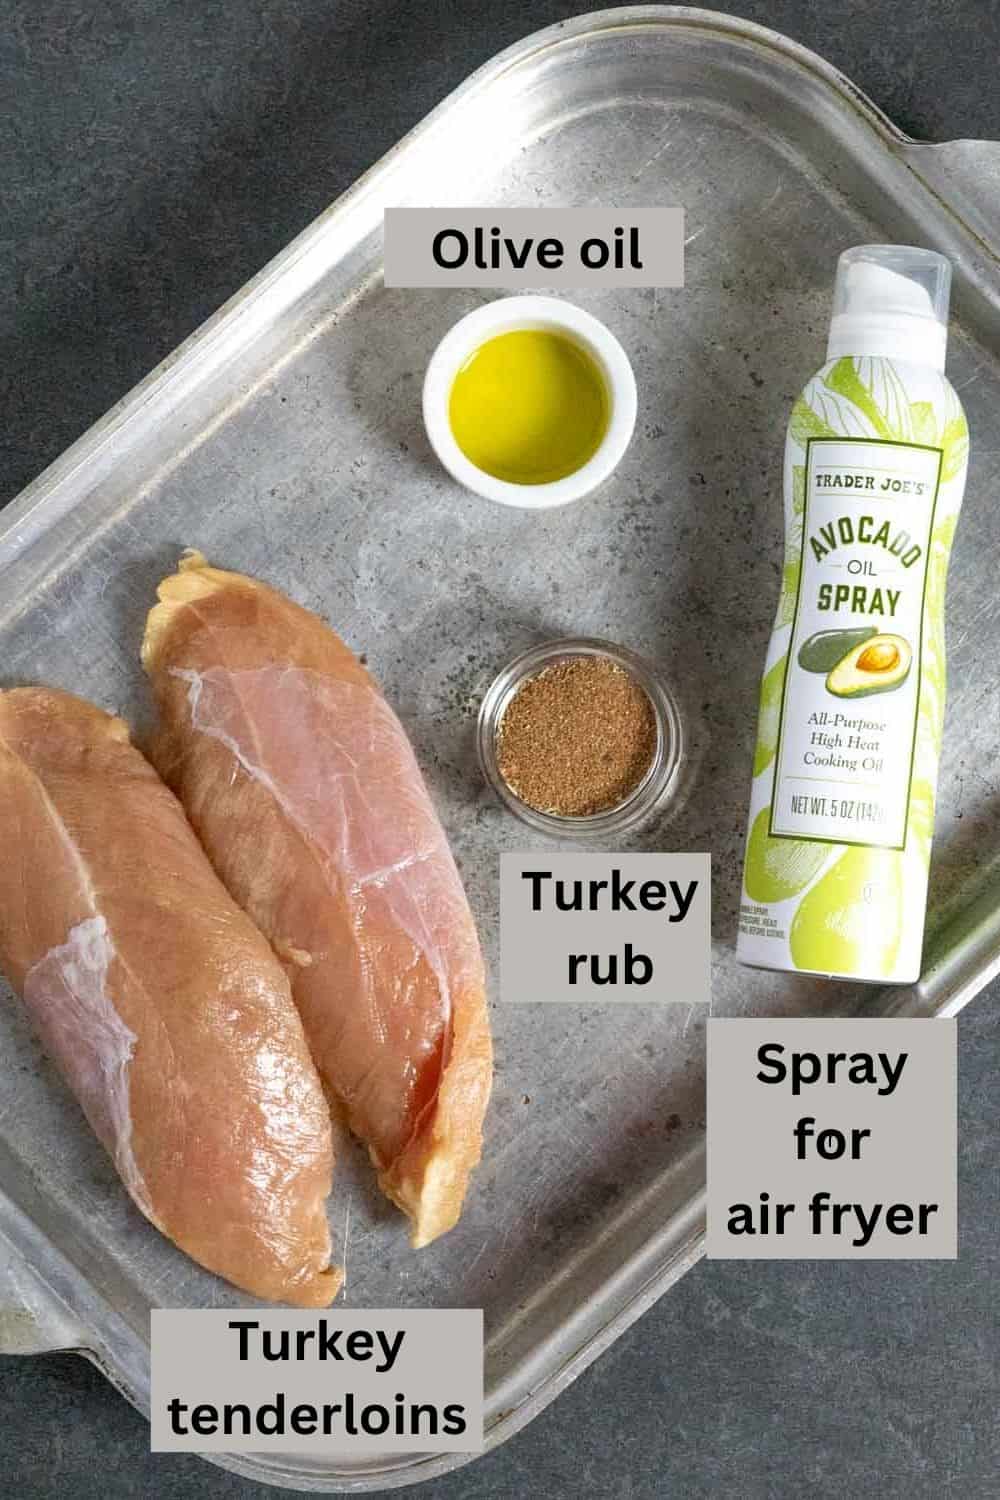 Ingredients for turkey tenderloins with black text labels.